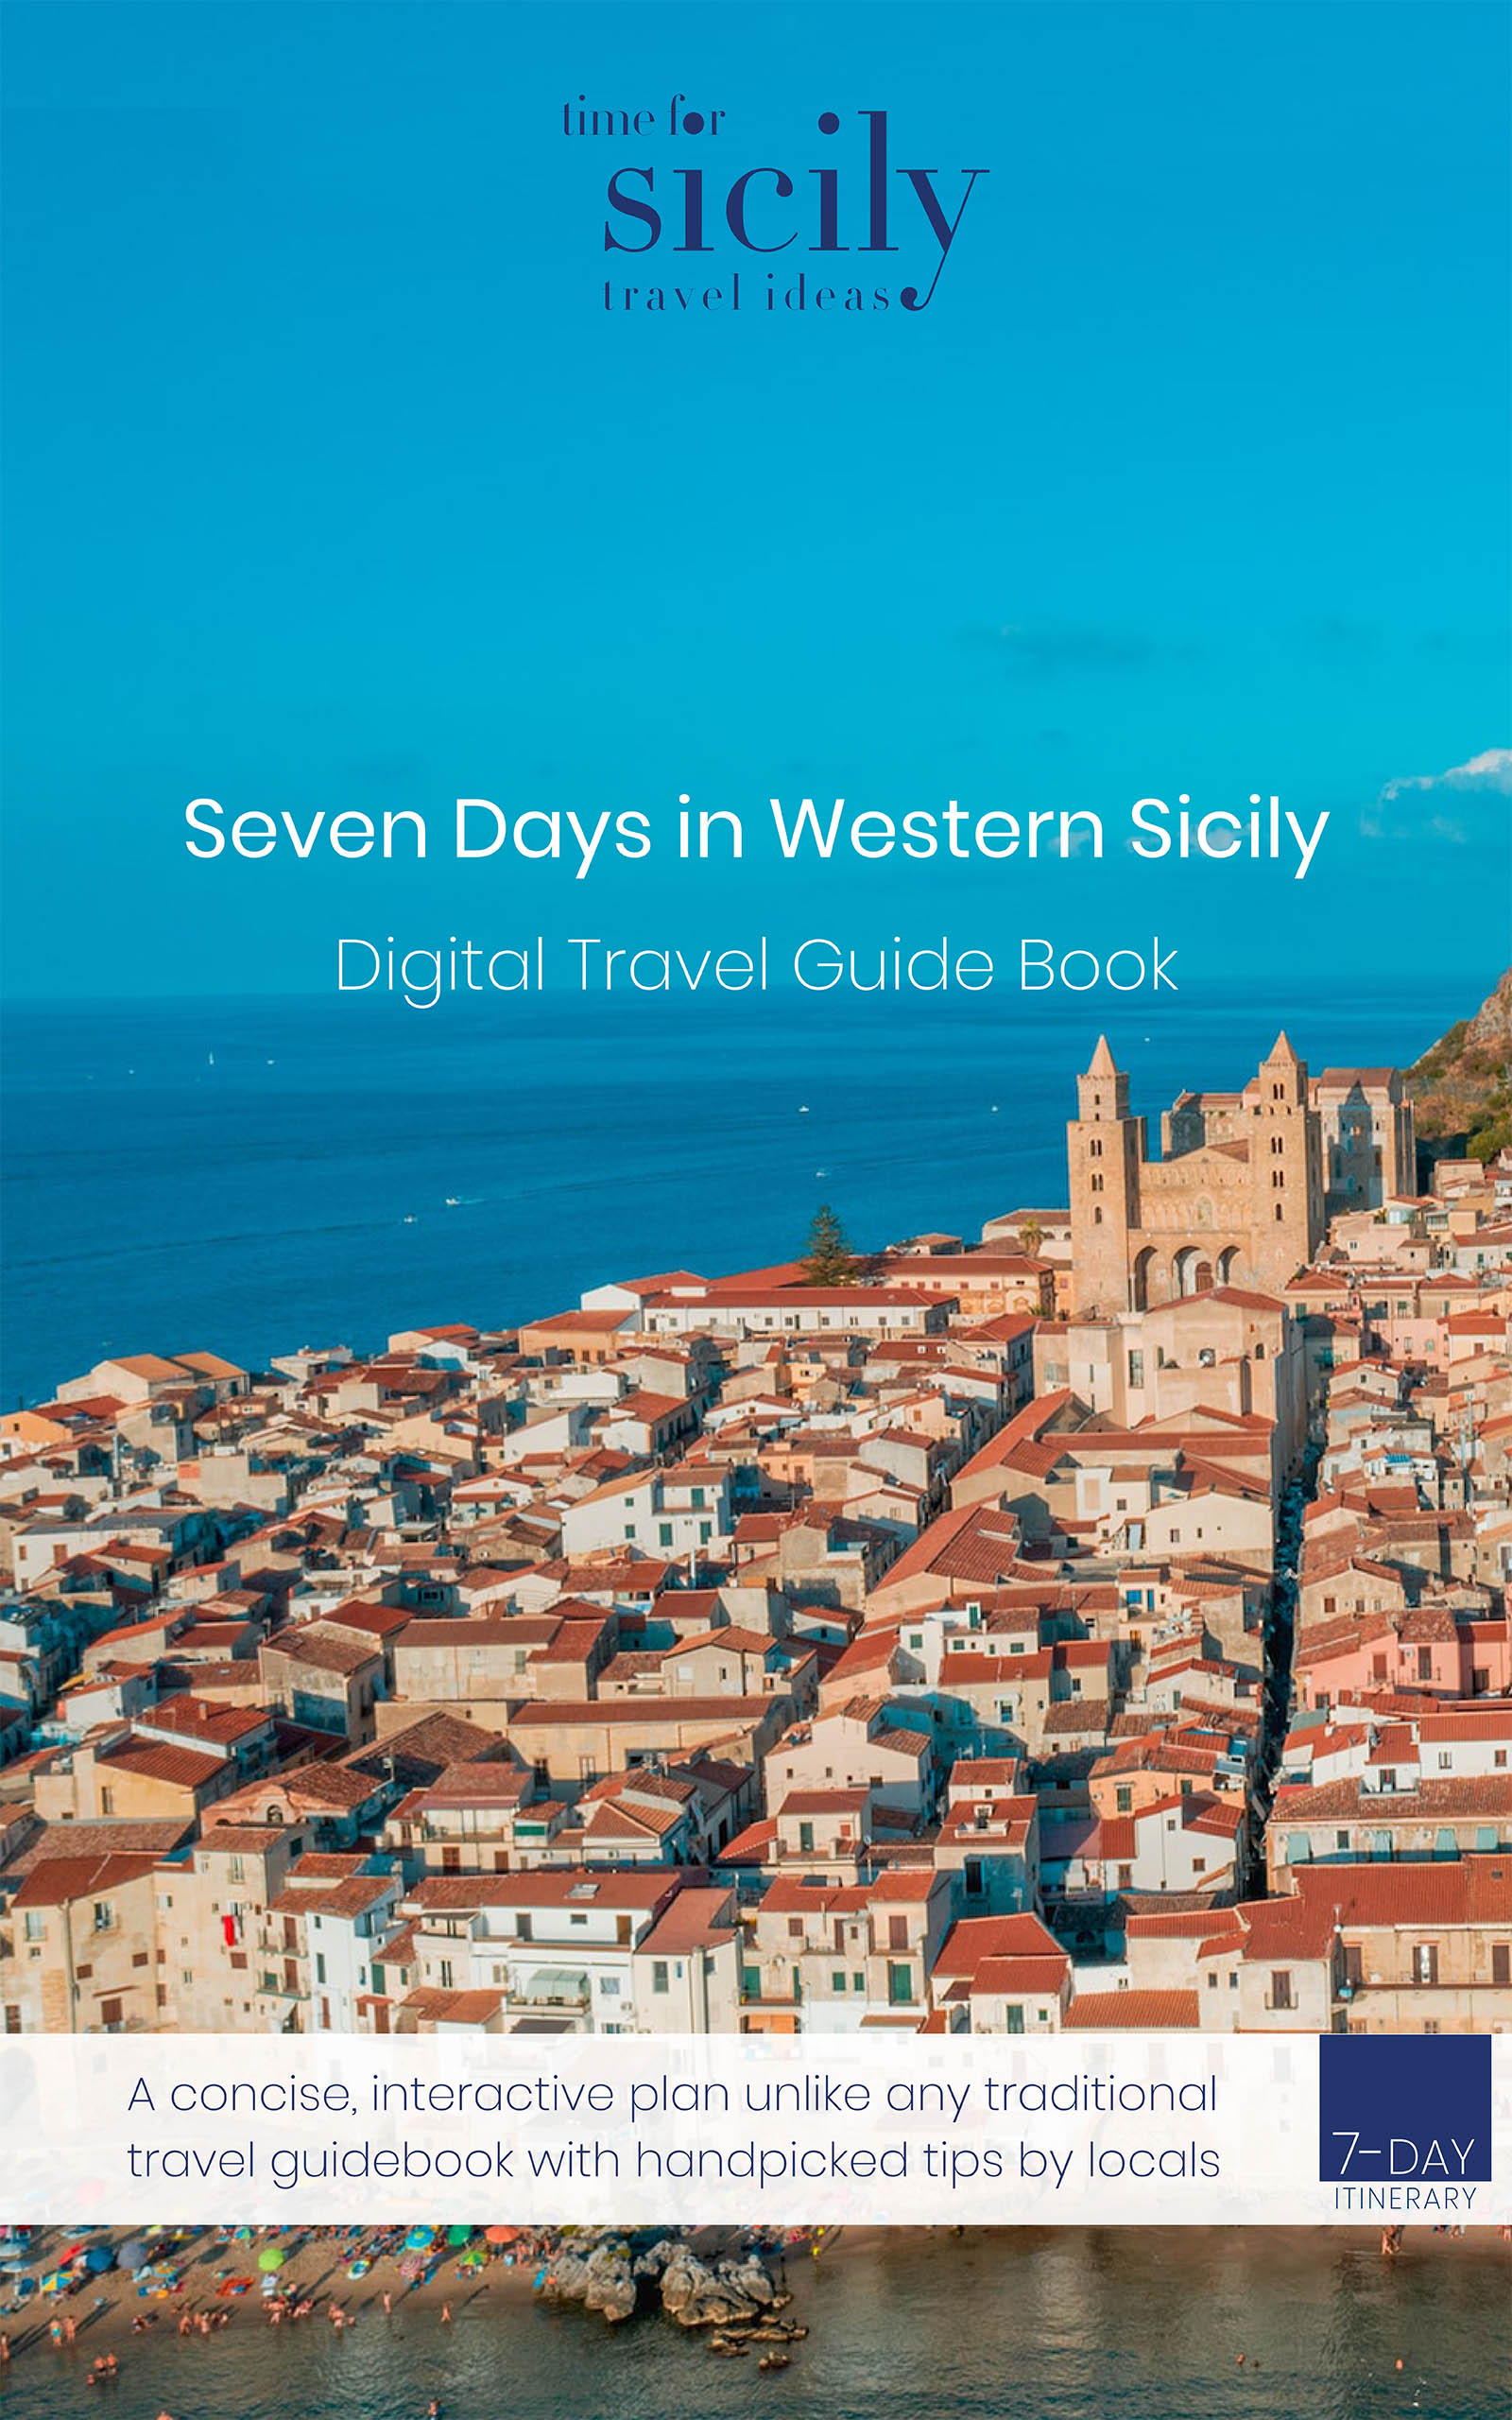 SEVEN DAYS IN WESTERN SICILY